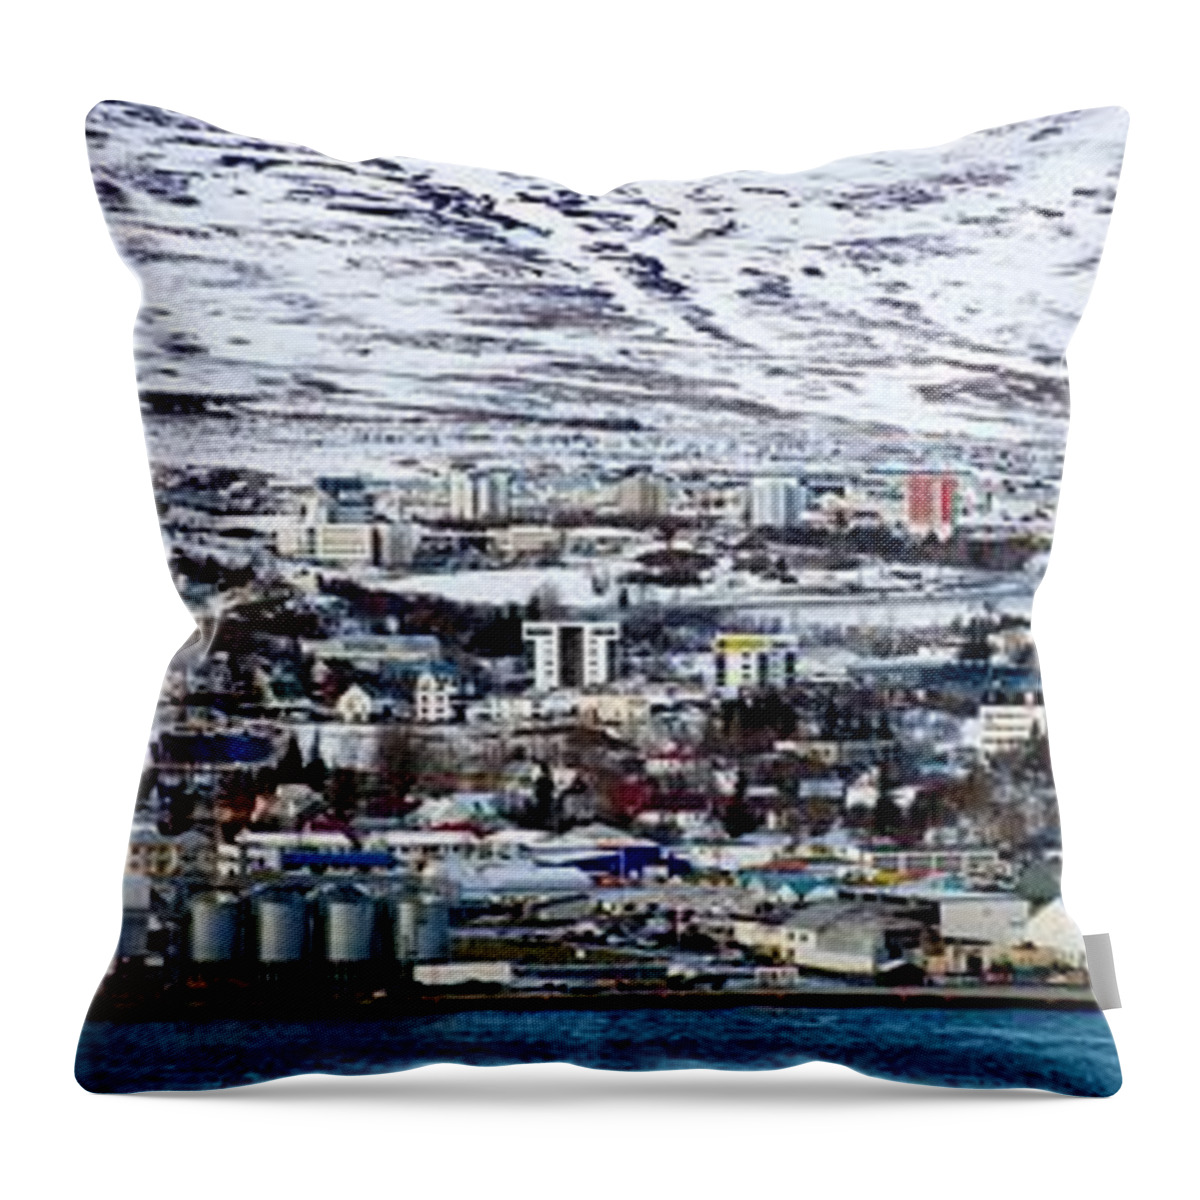 Northern Throw Pillow featuring the photograph Akureyri by Robert Grac